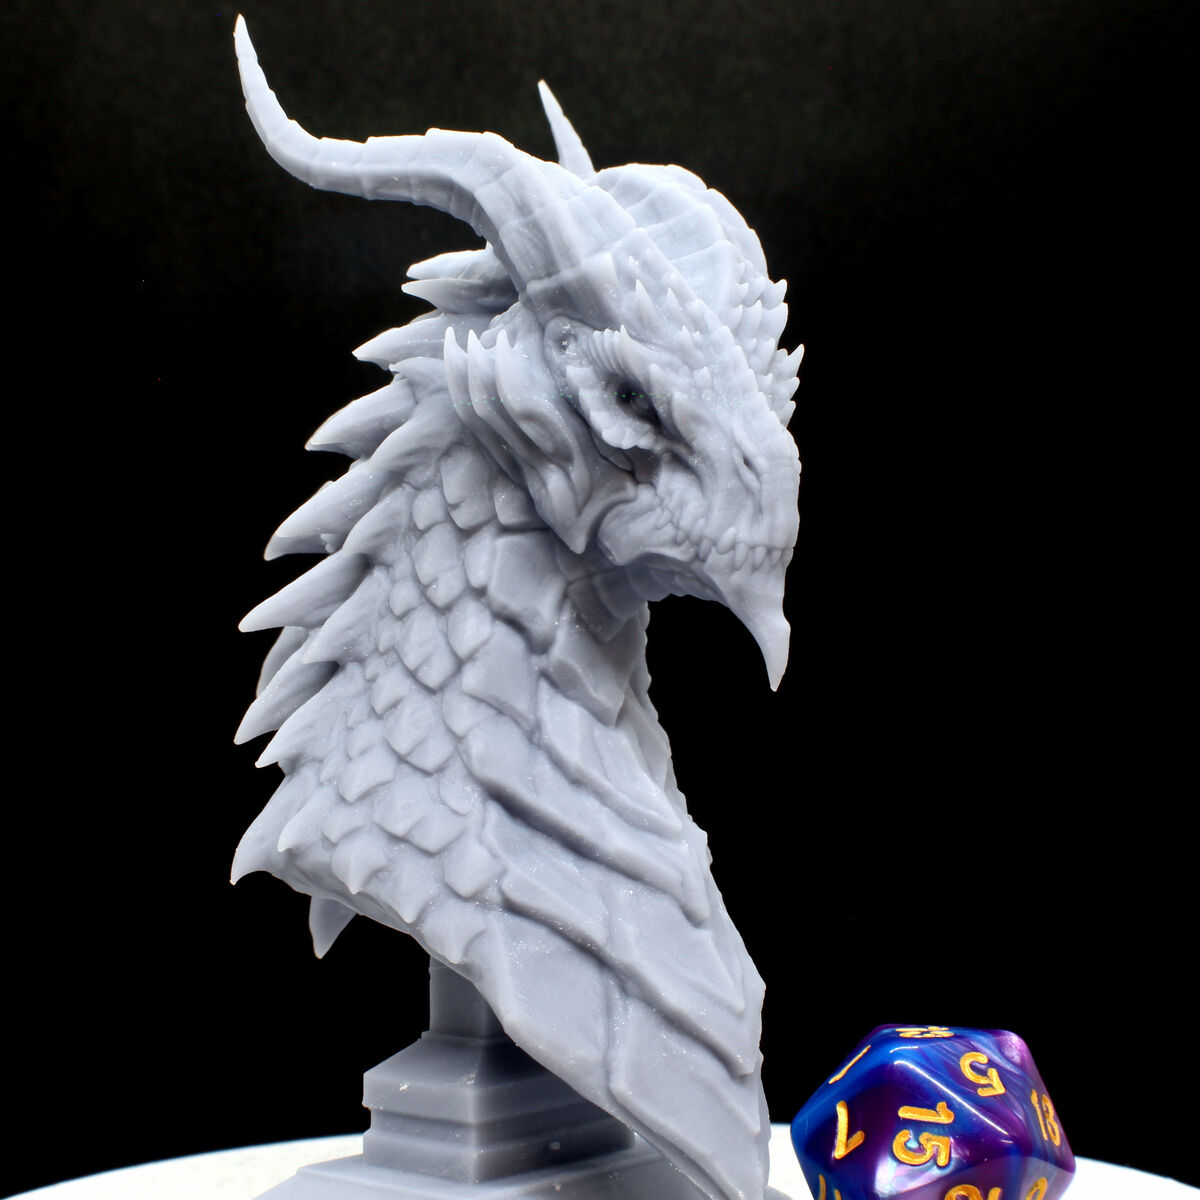 Lot de bustes de Dragons, figurines à peindre - Studio Warp